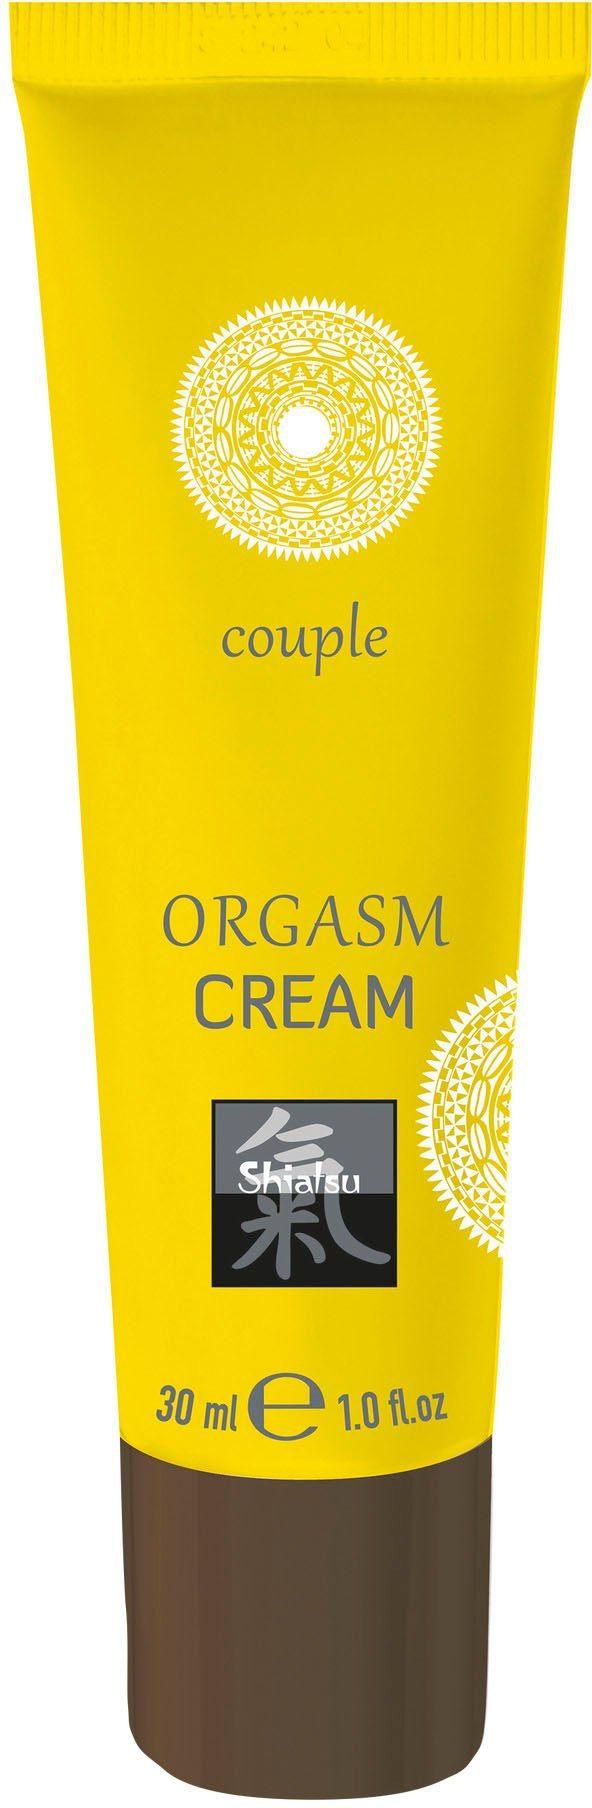 Shiatsu Intimcreme, Orgasm Cream | Gleitgele